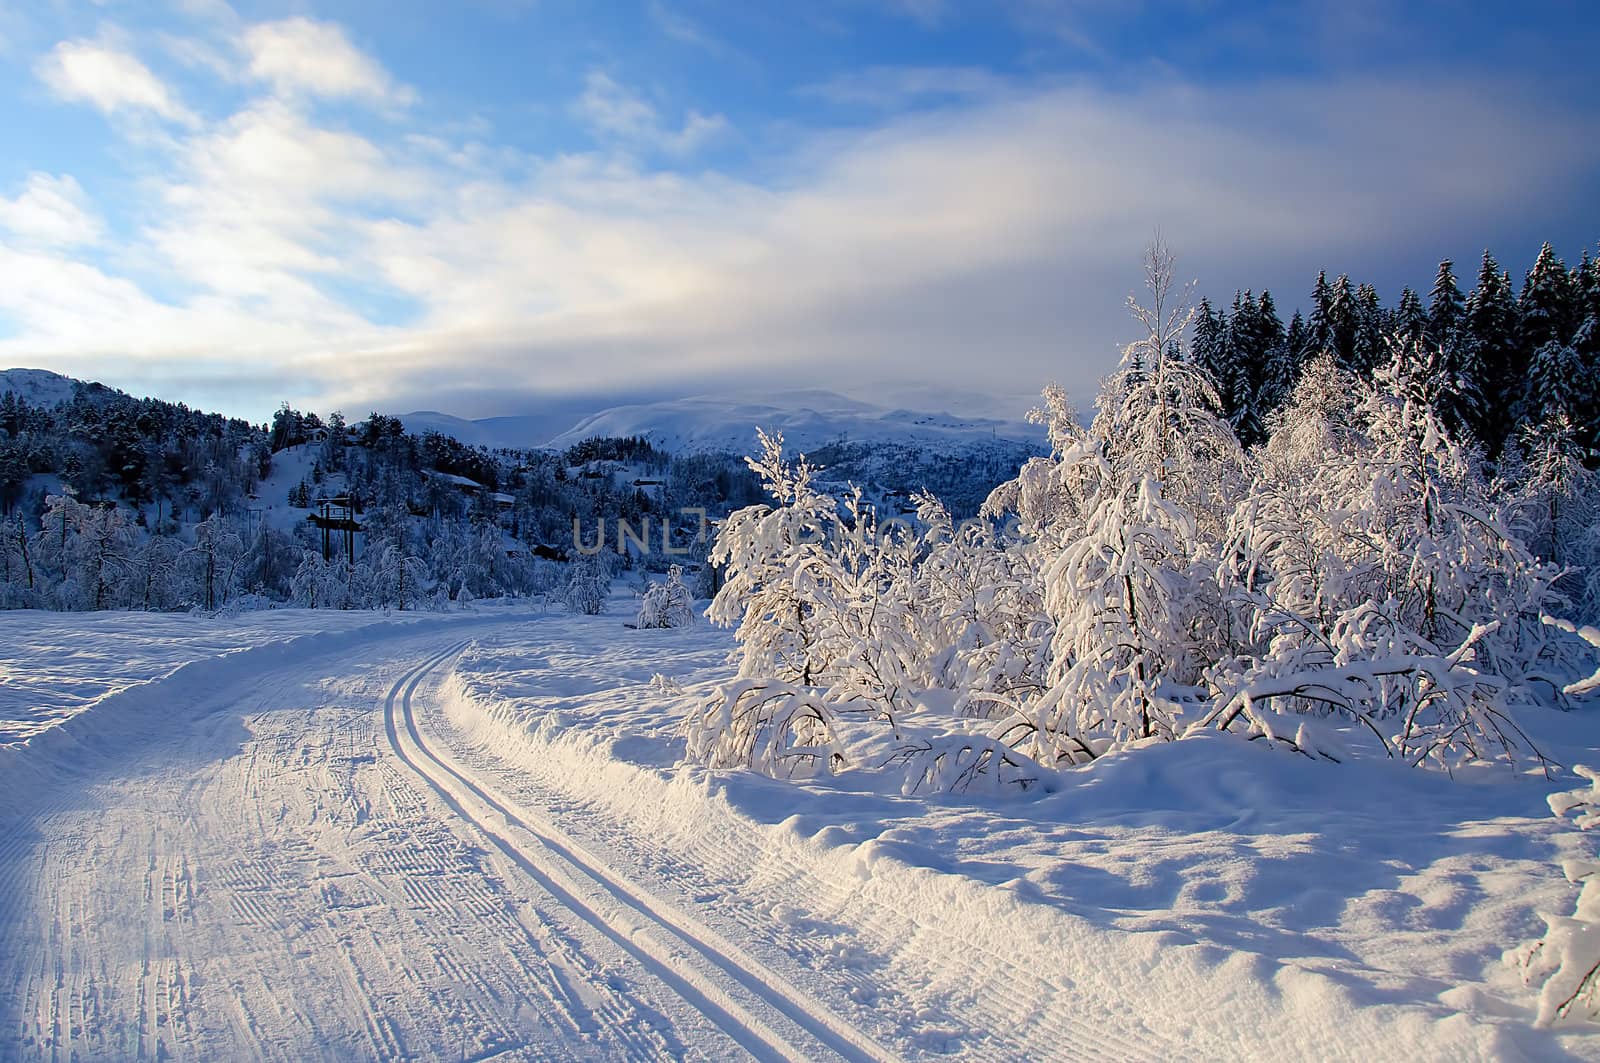 Ski track in winter wonderland by GryT